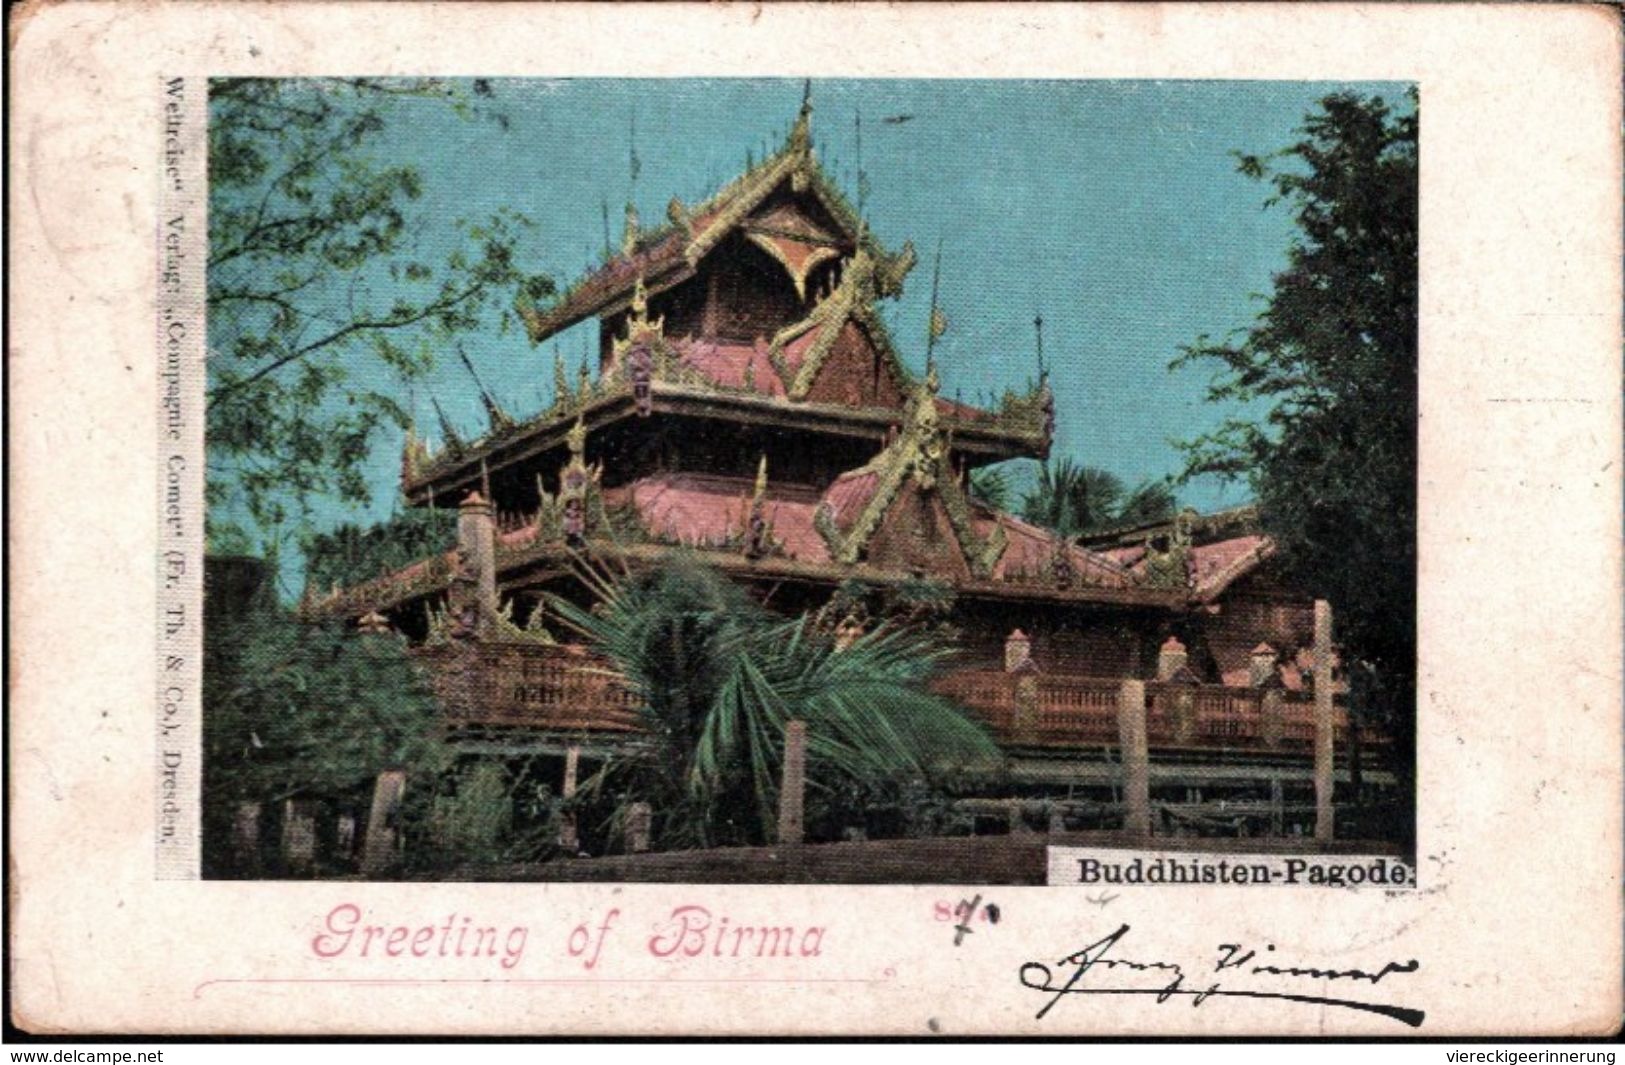 ! Greeting Of Birma, Weltreise Verlag Compagnie Comet, Dresden, 1899, Buddhisten Pagode, Tempel, Buddha, Burma - Myanmar (Burma)